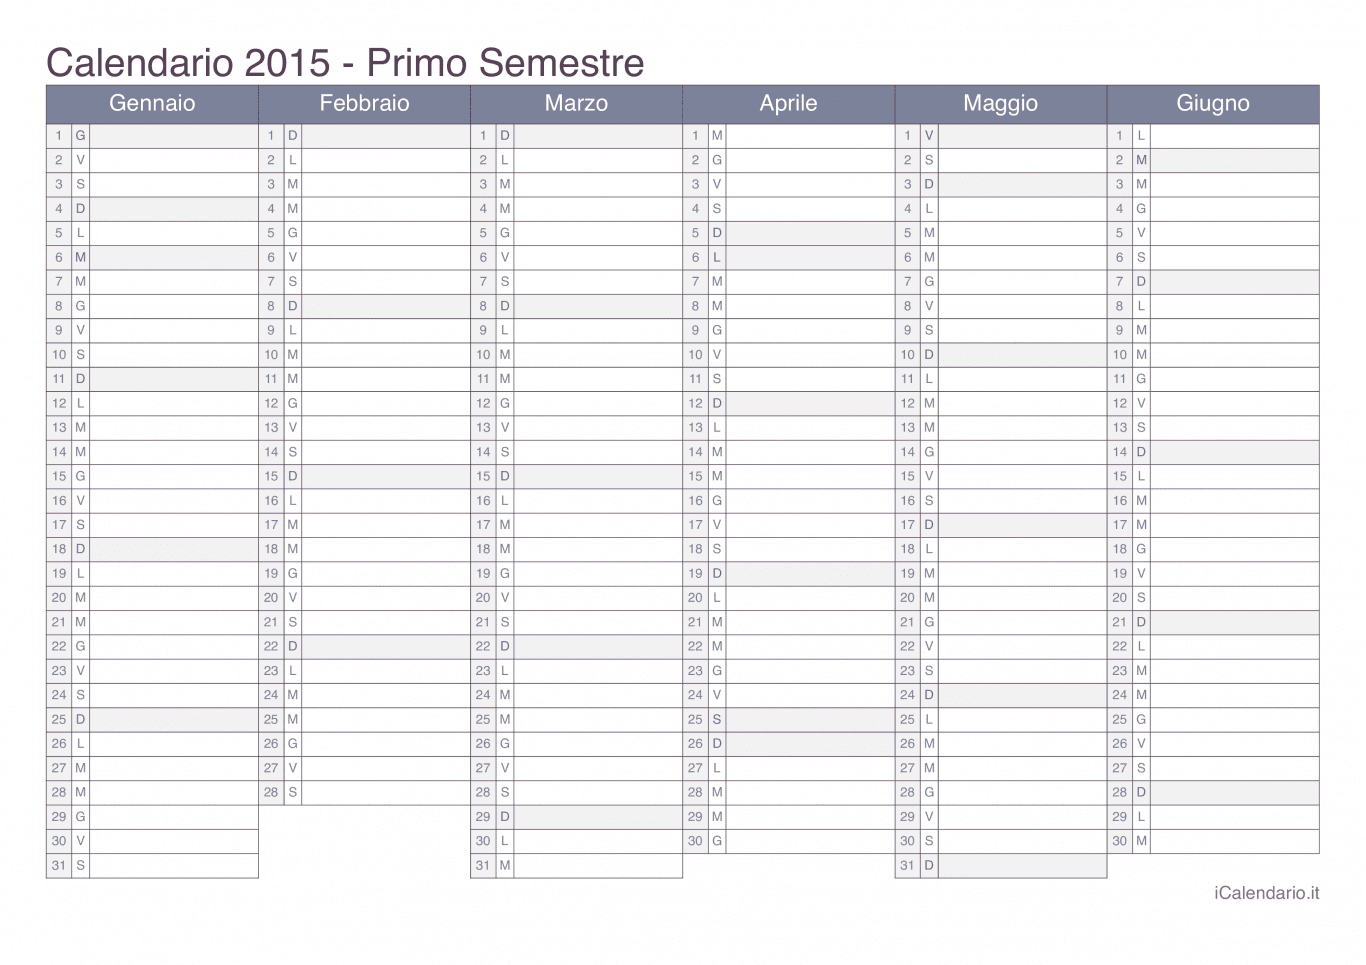 Calendario semestrale 2015 - Office